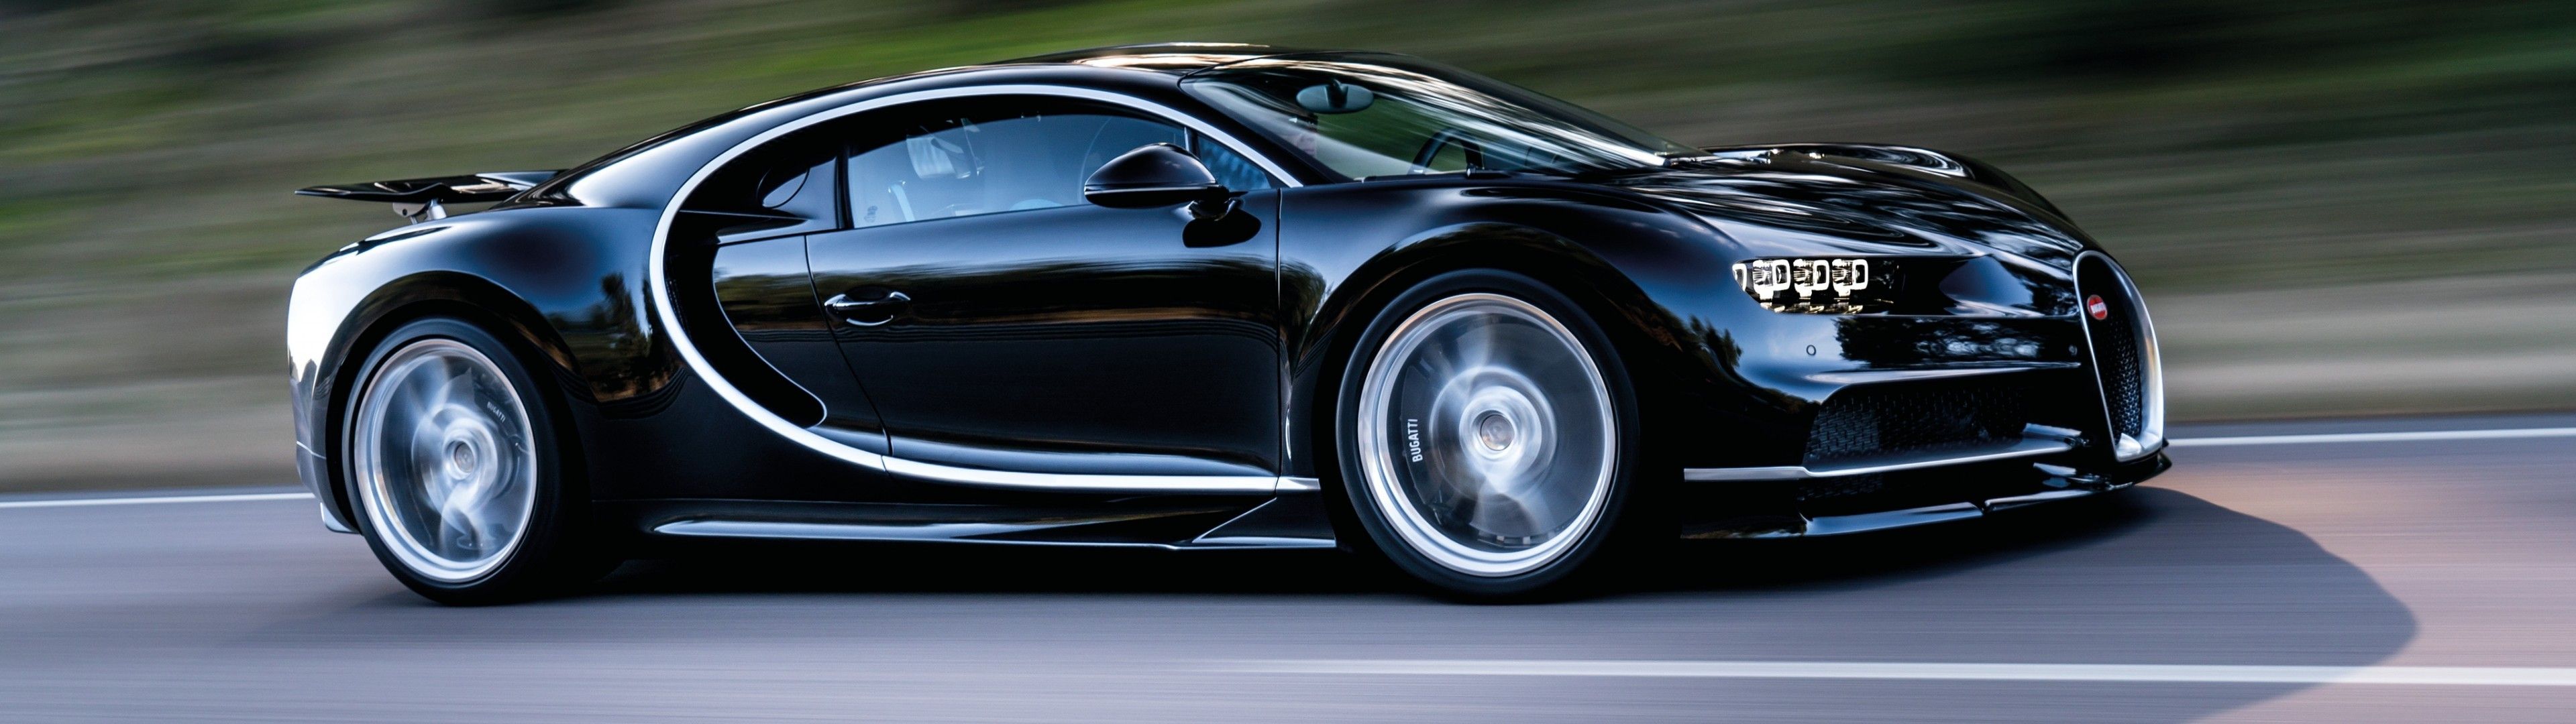 Download 3840x1080 Bugatti Chiron, Black, Side View, Road, Supercar, Cars Wallpaper